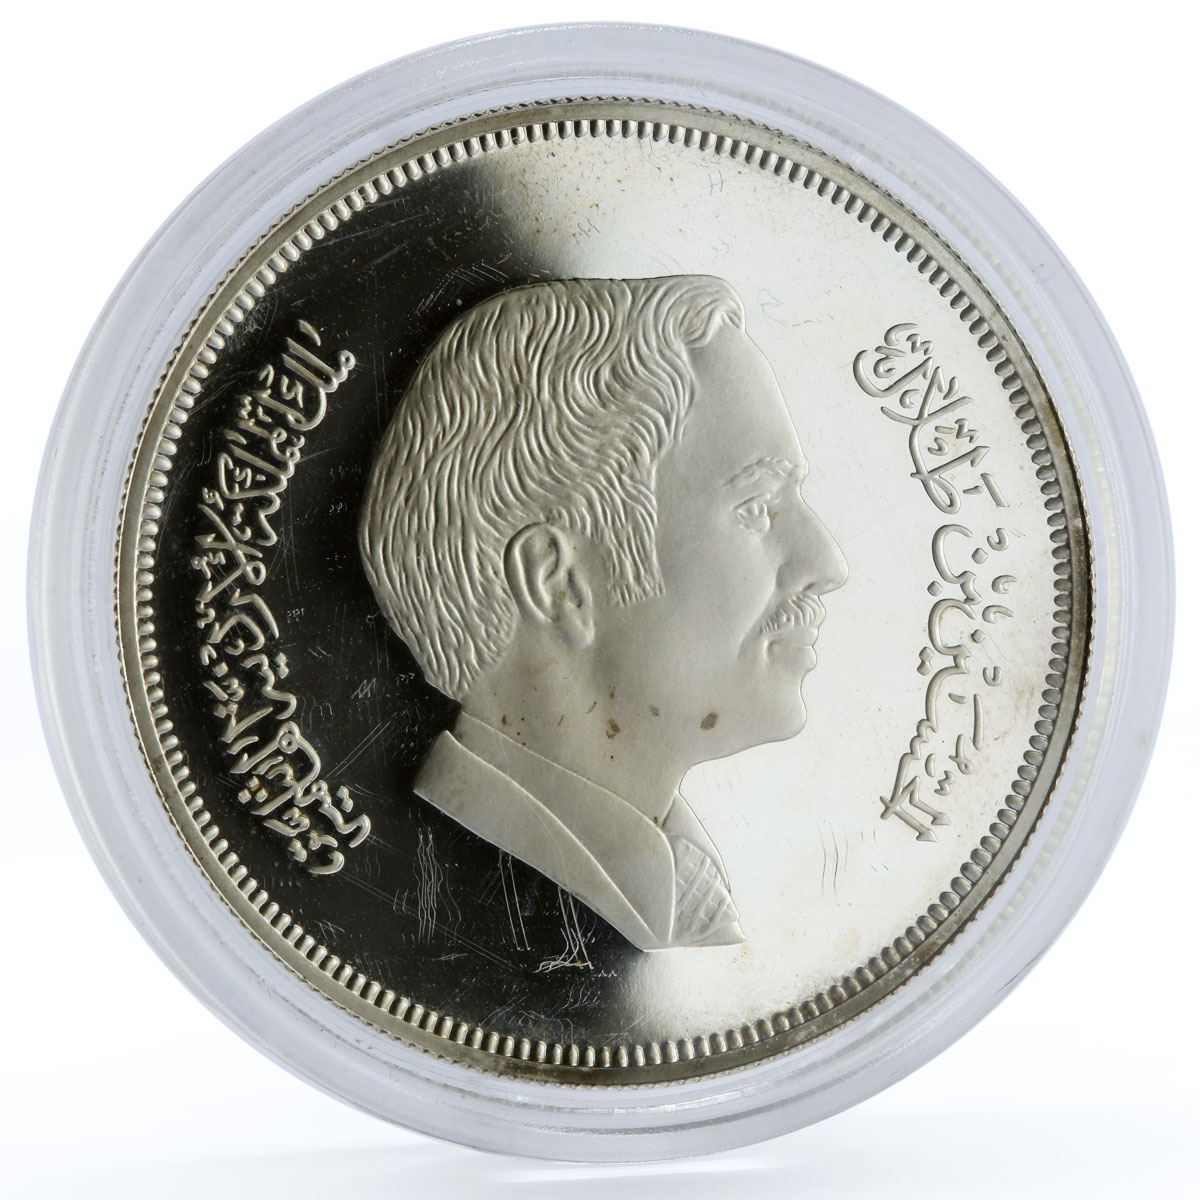 Jordan 3 dinars Conservation of Nature Palestine Sunbird silver coin 1977